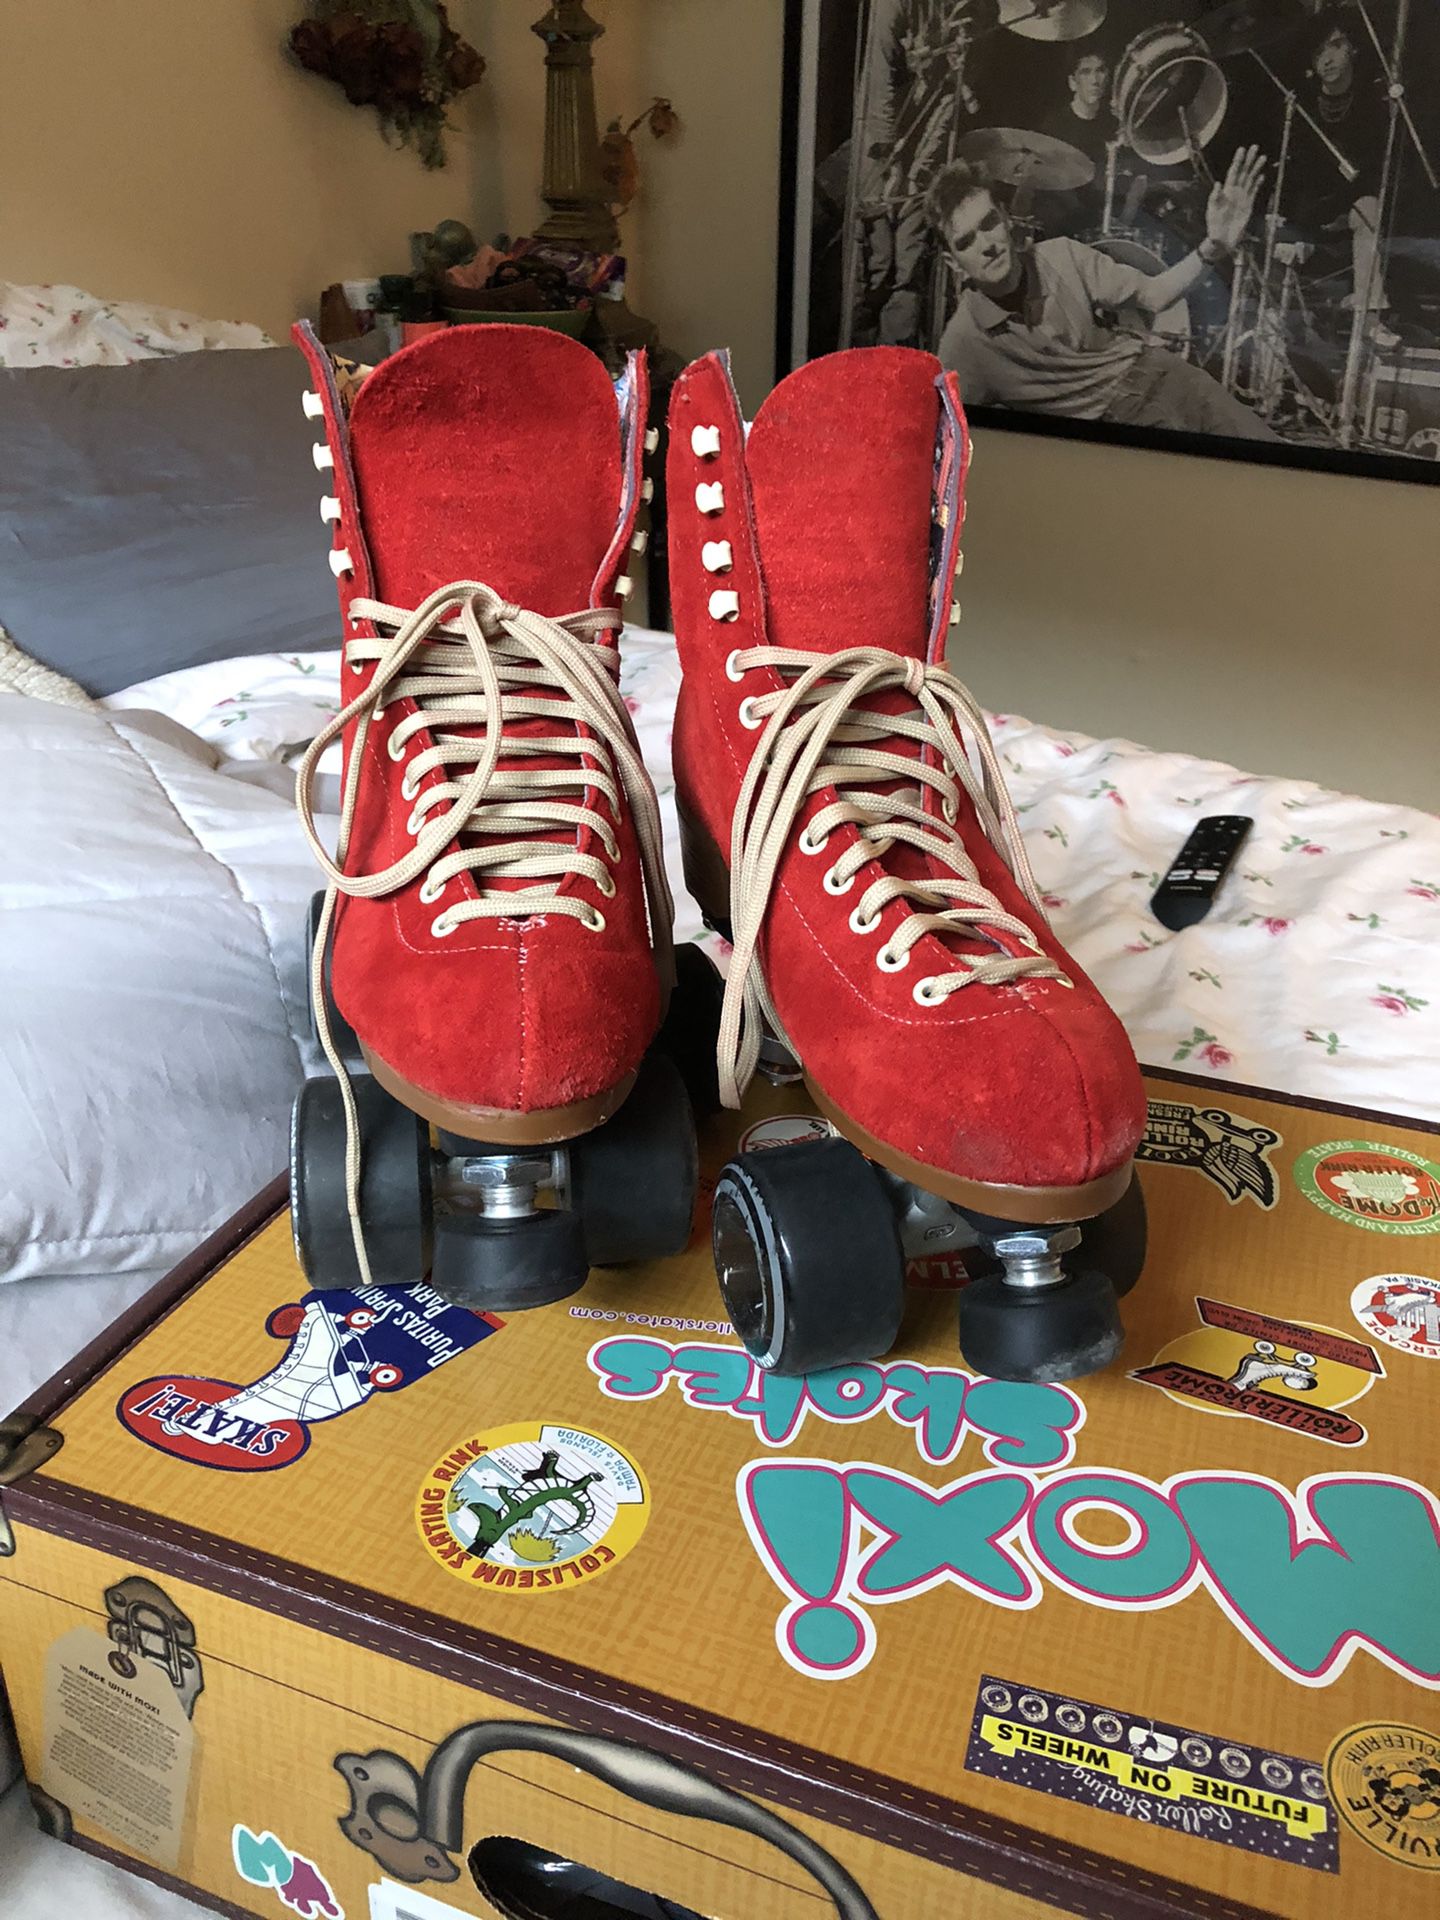 Moxi Roller skates